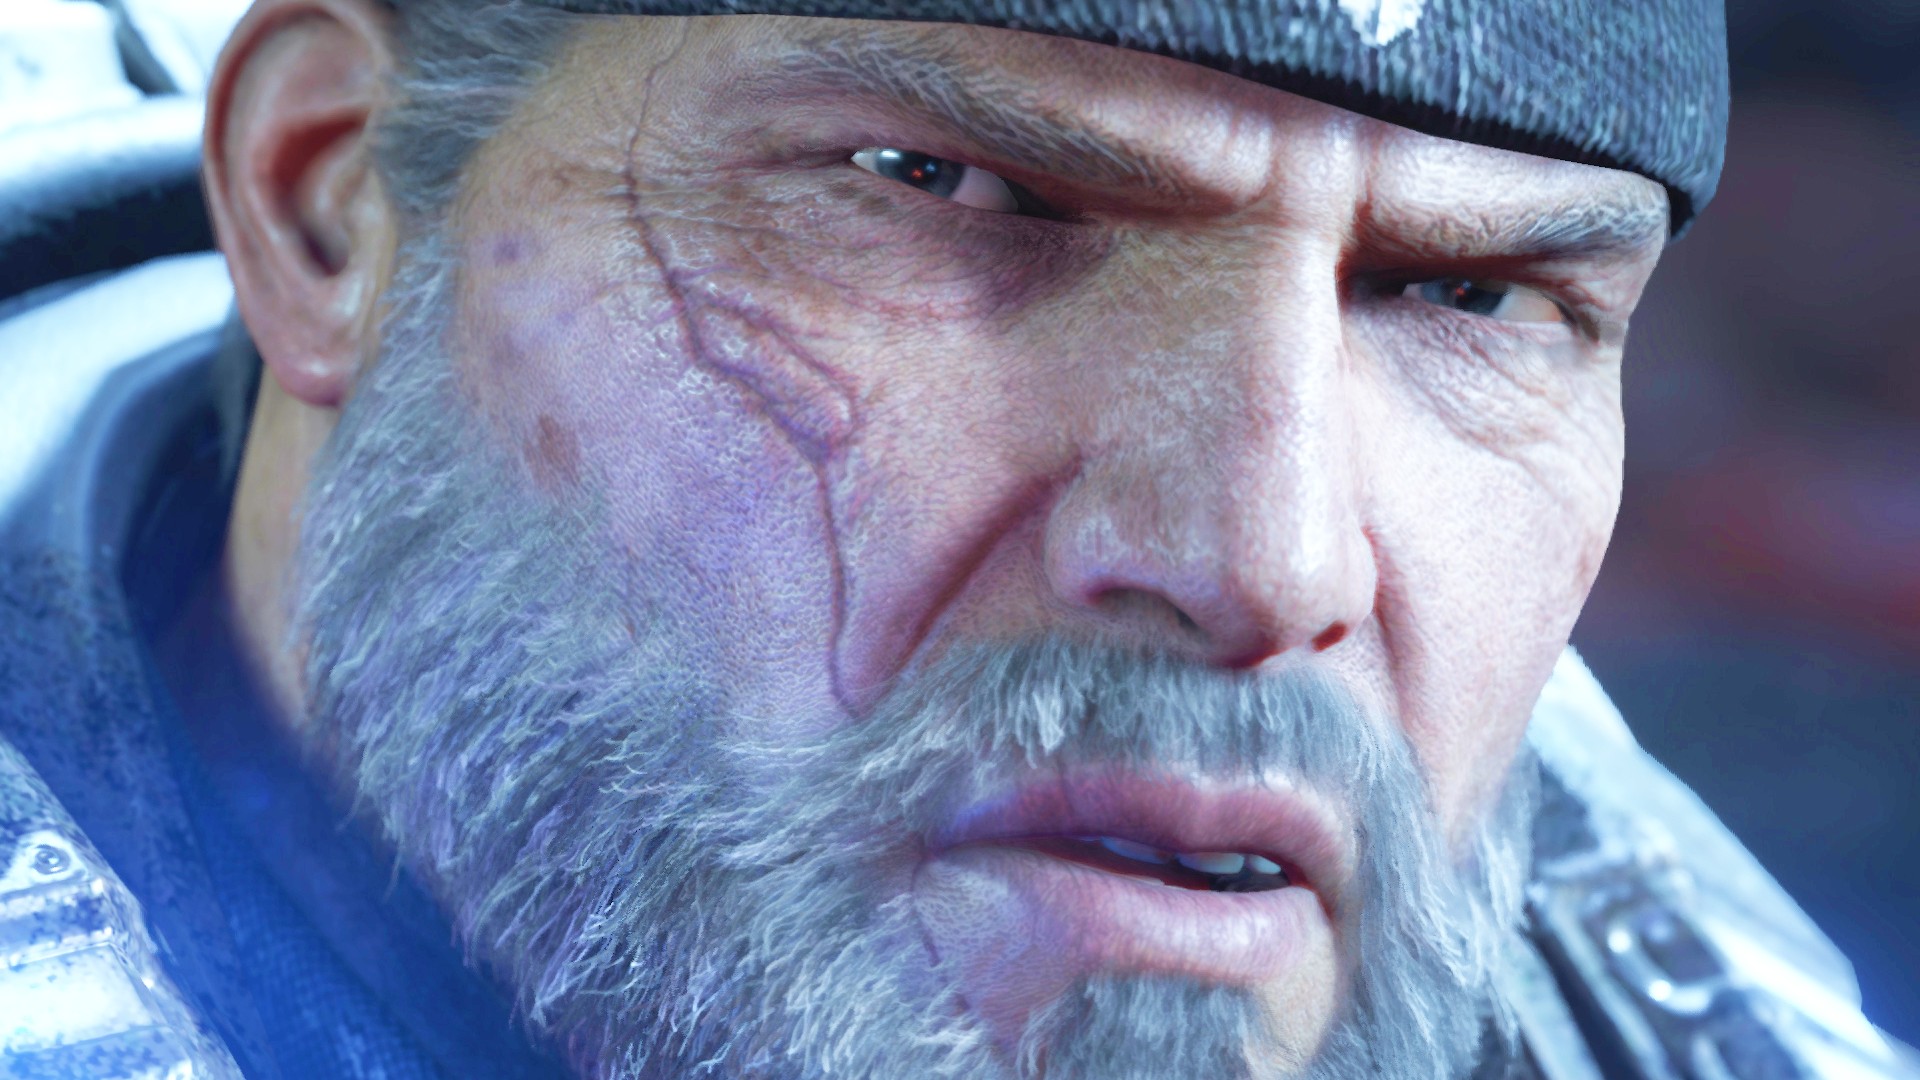 Gears Of War 2 director teases return for Gears 6